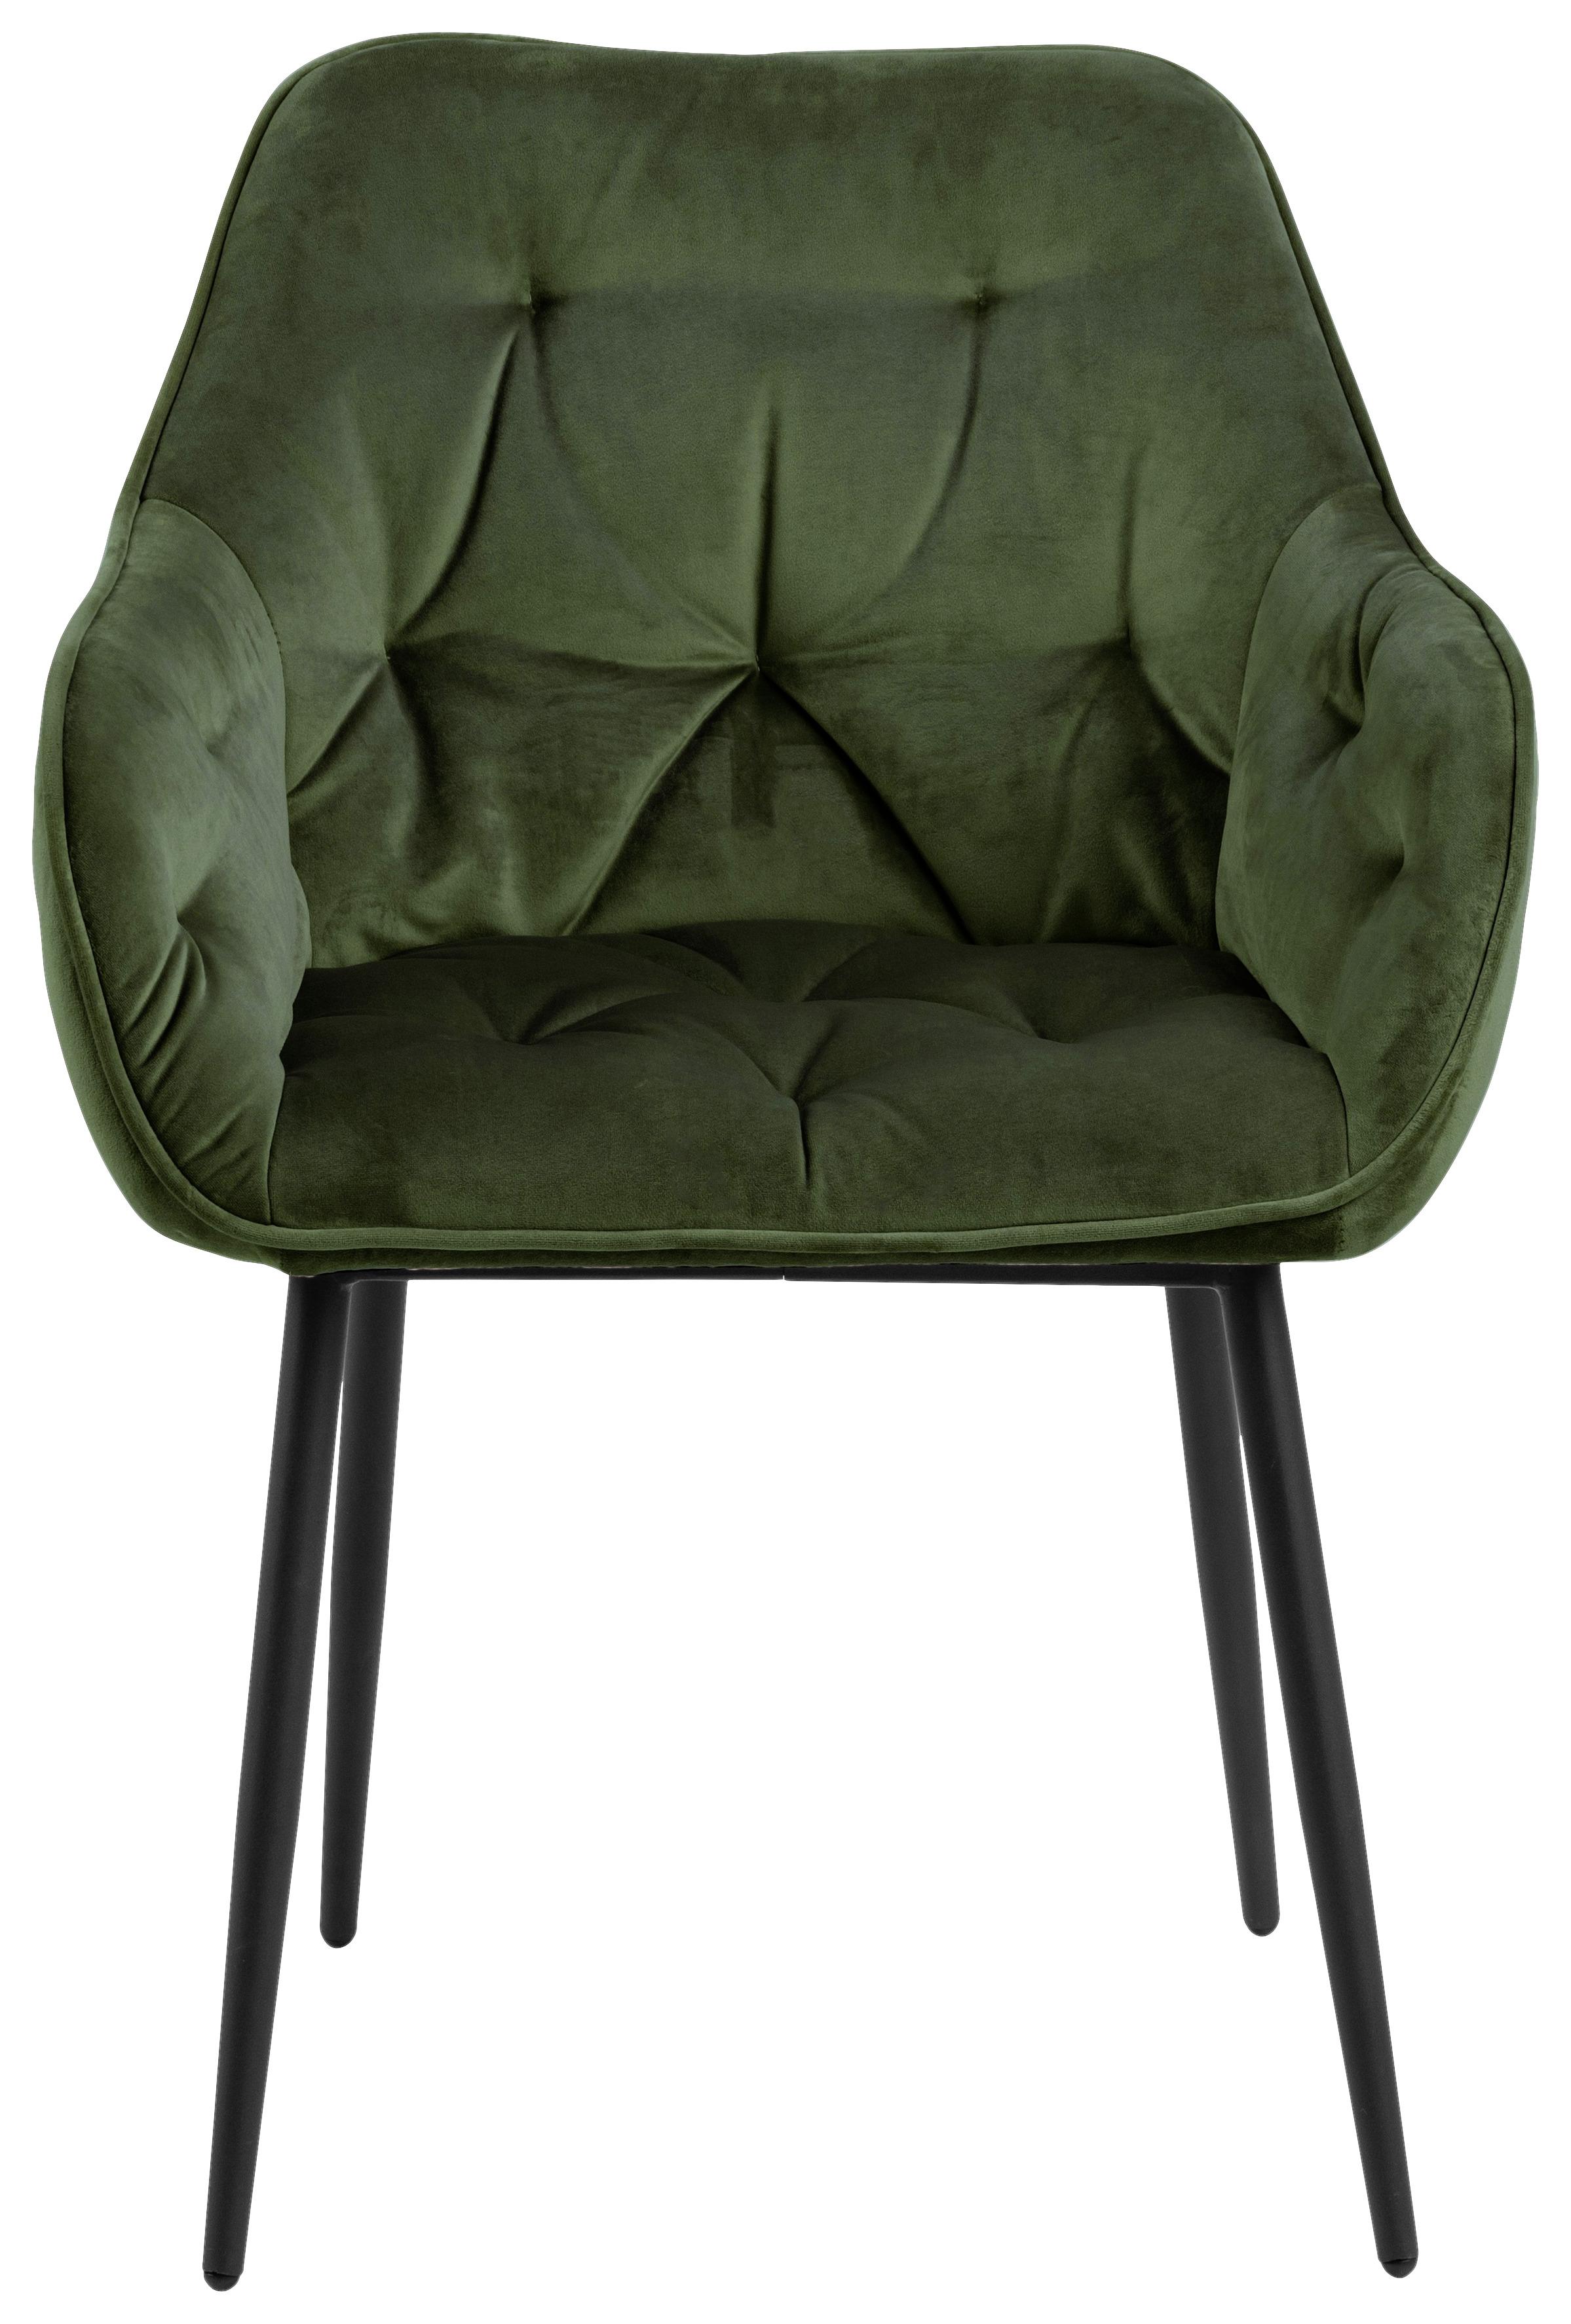 Židle S Područkami Brooke Zelená Samet - černá/zelená, Trend, kov/textil (58/83/55cm) - Livetastic